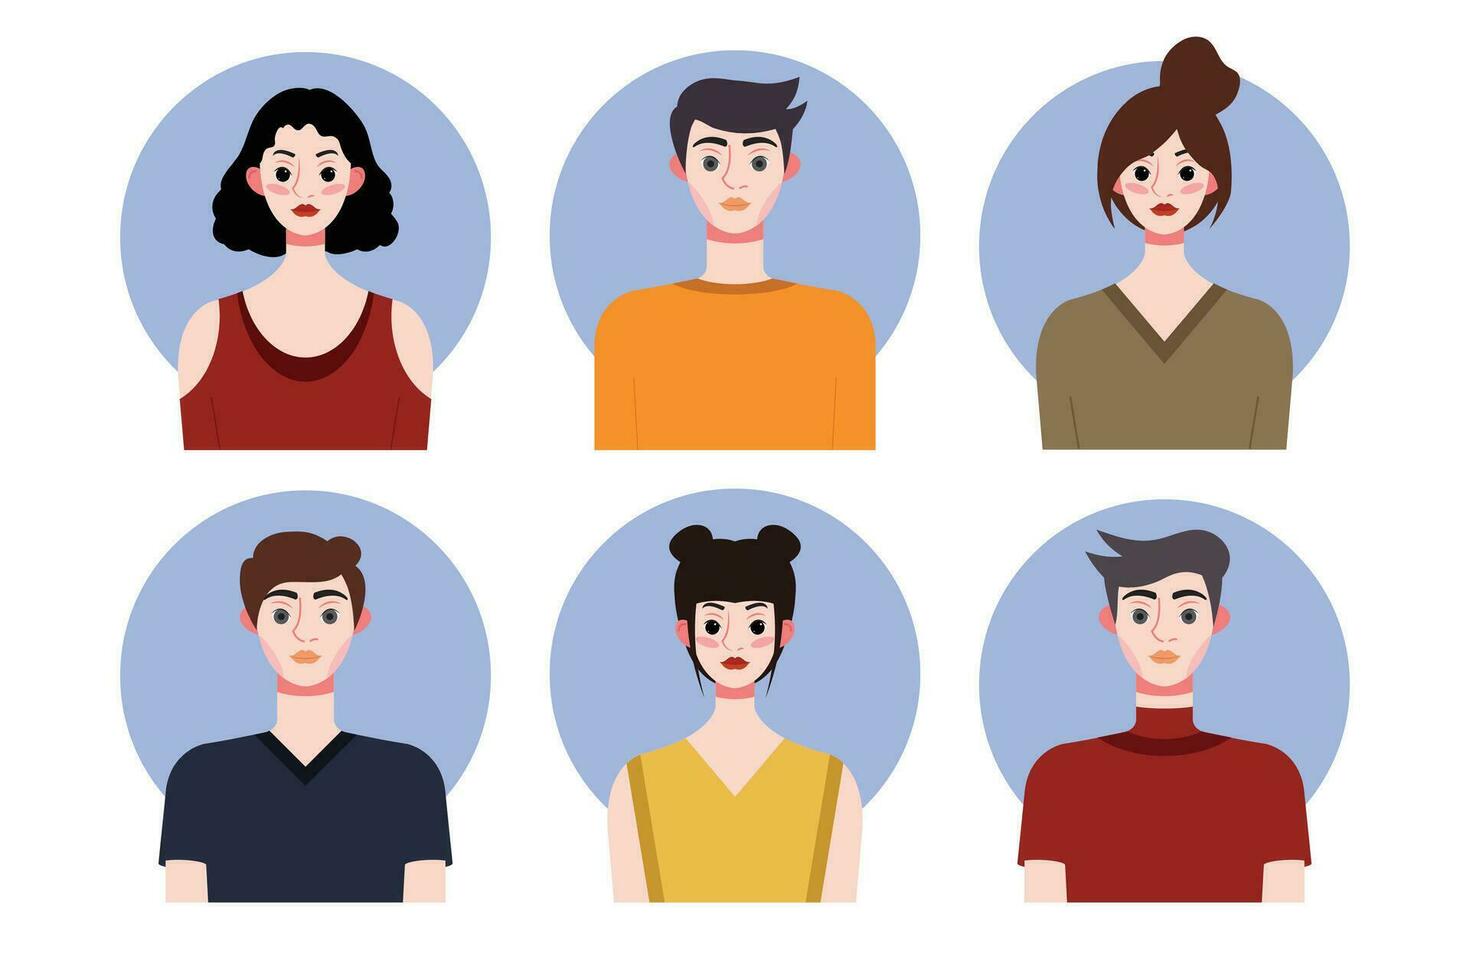 Set of social media profile templates with people avatars. Vector illustration